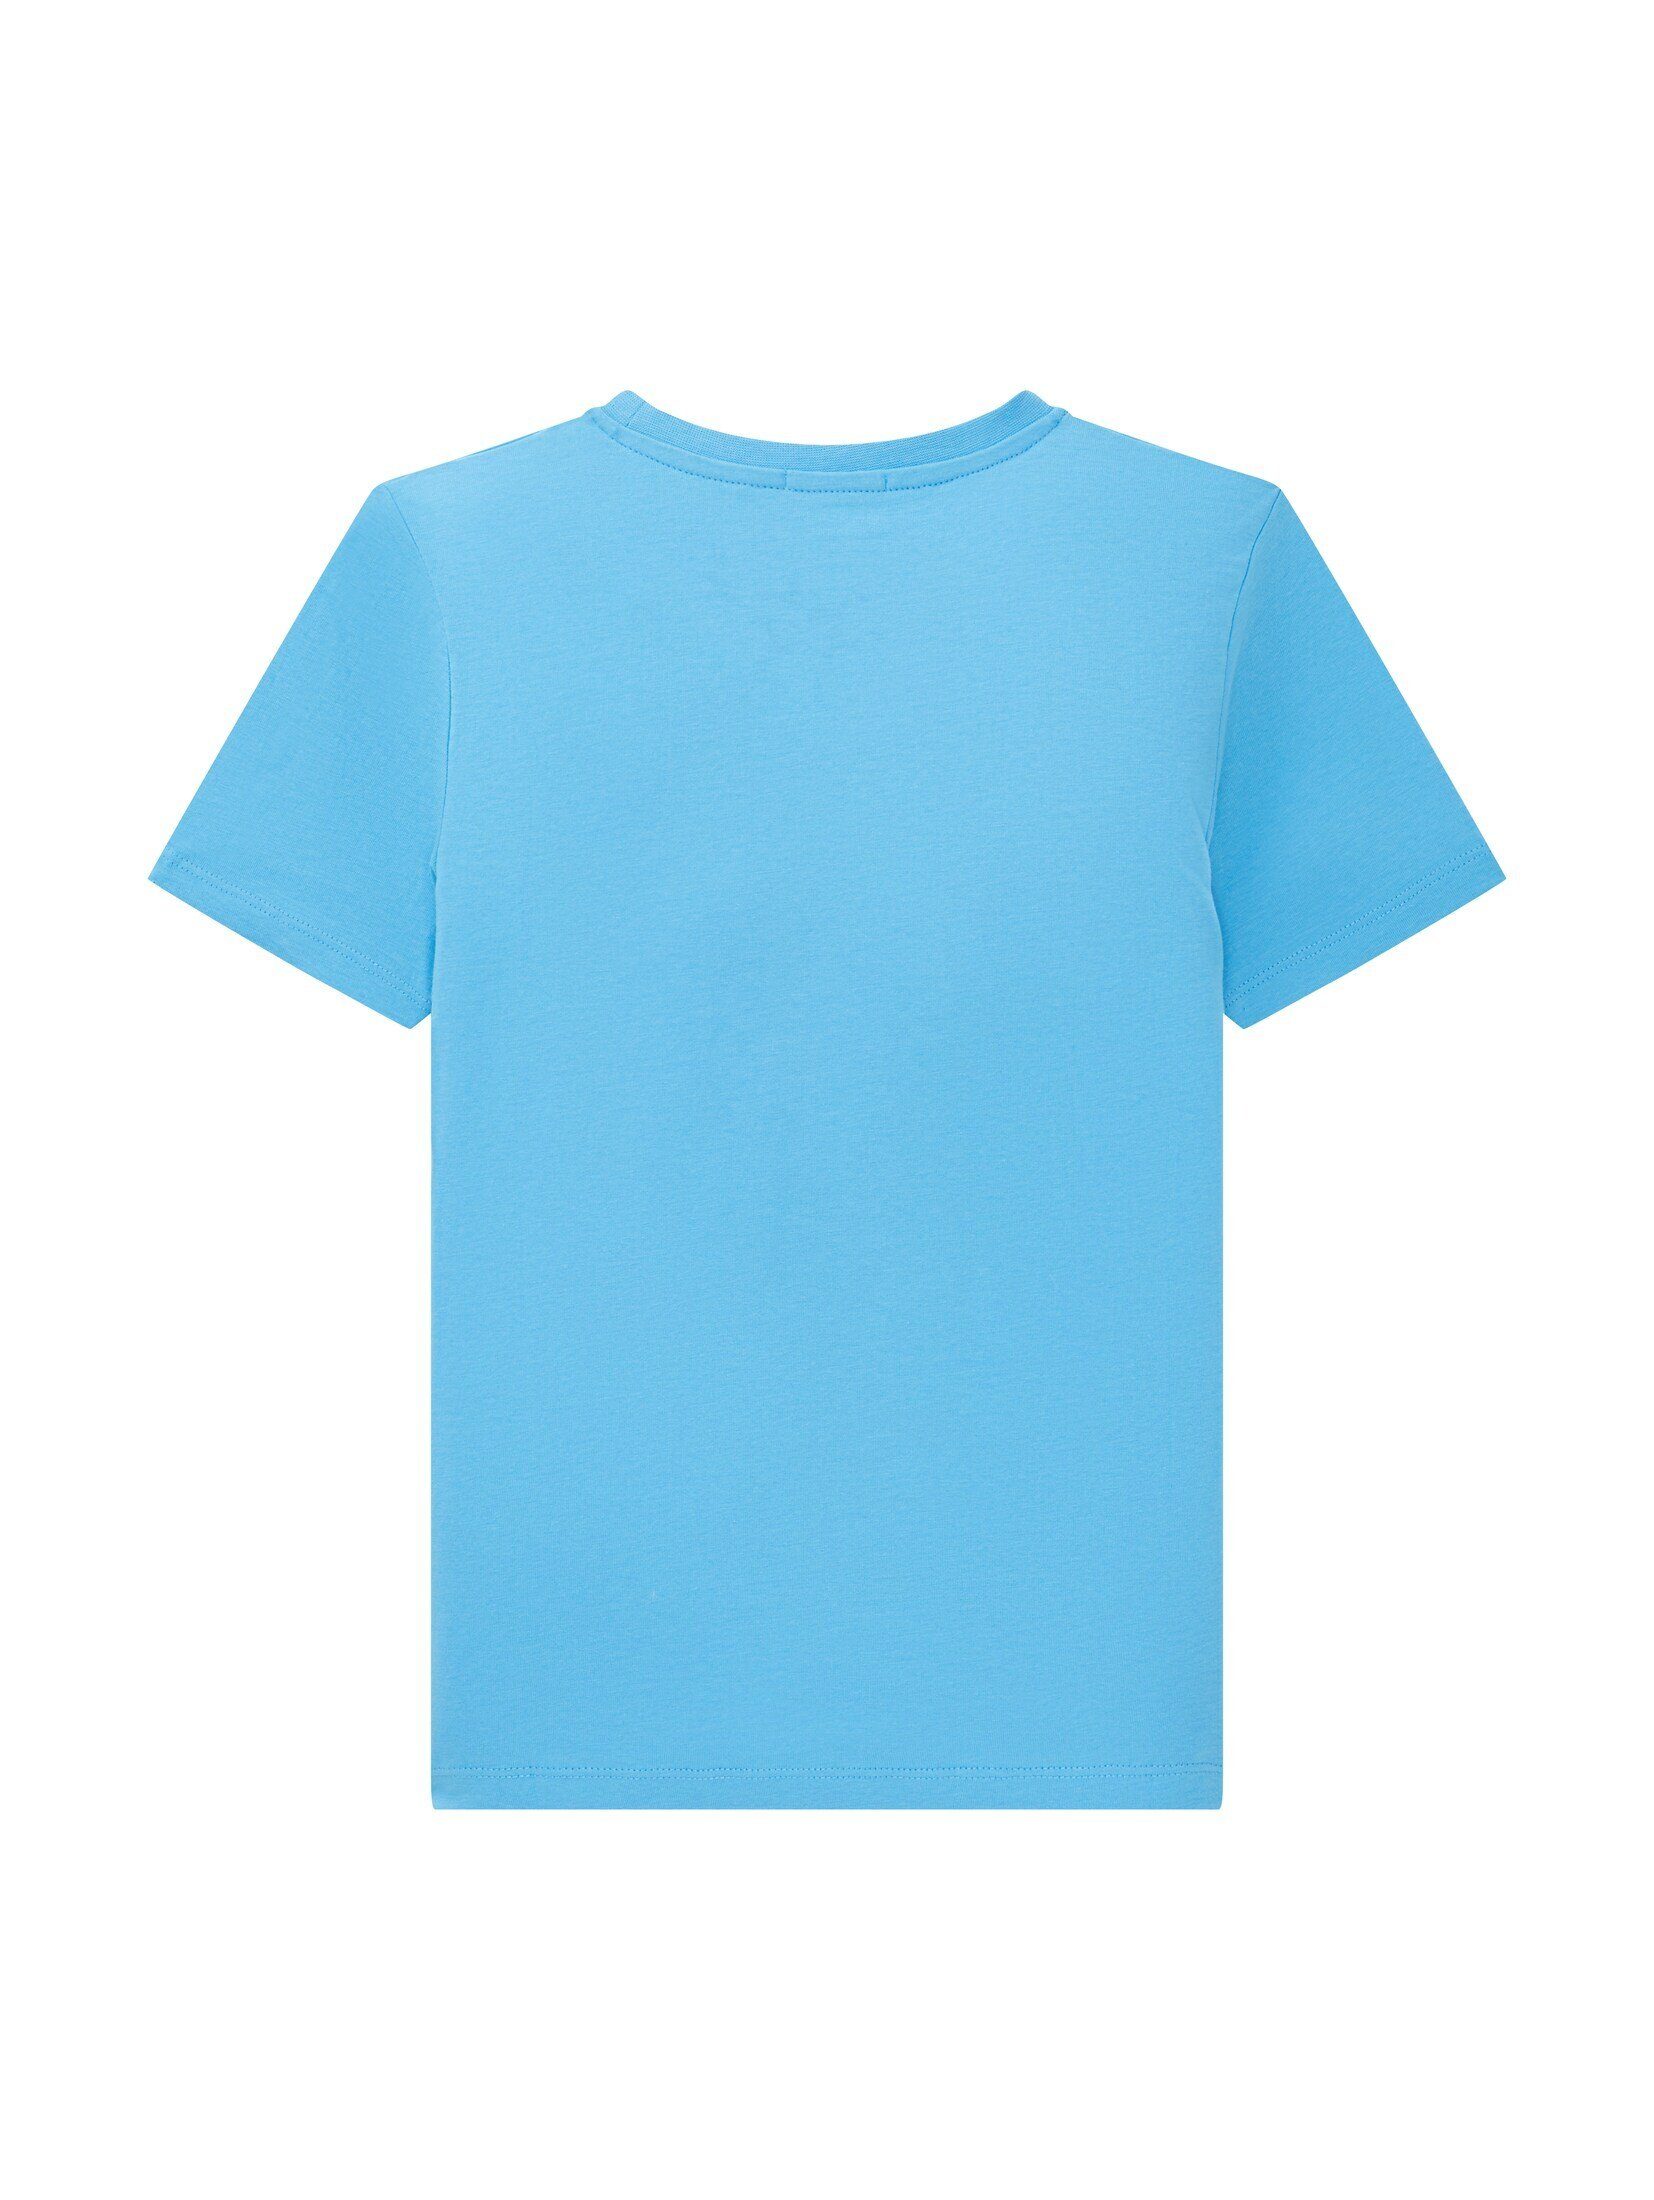 TOM TAILOR T-Shirt T-Shirt Fotoprint sky rainy blue mit